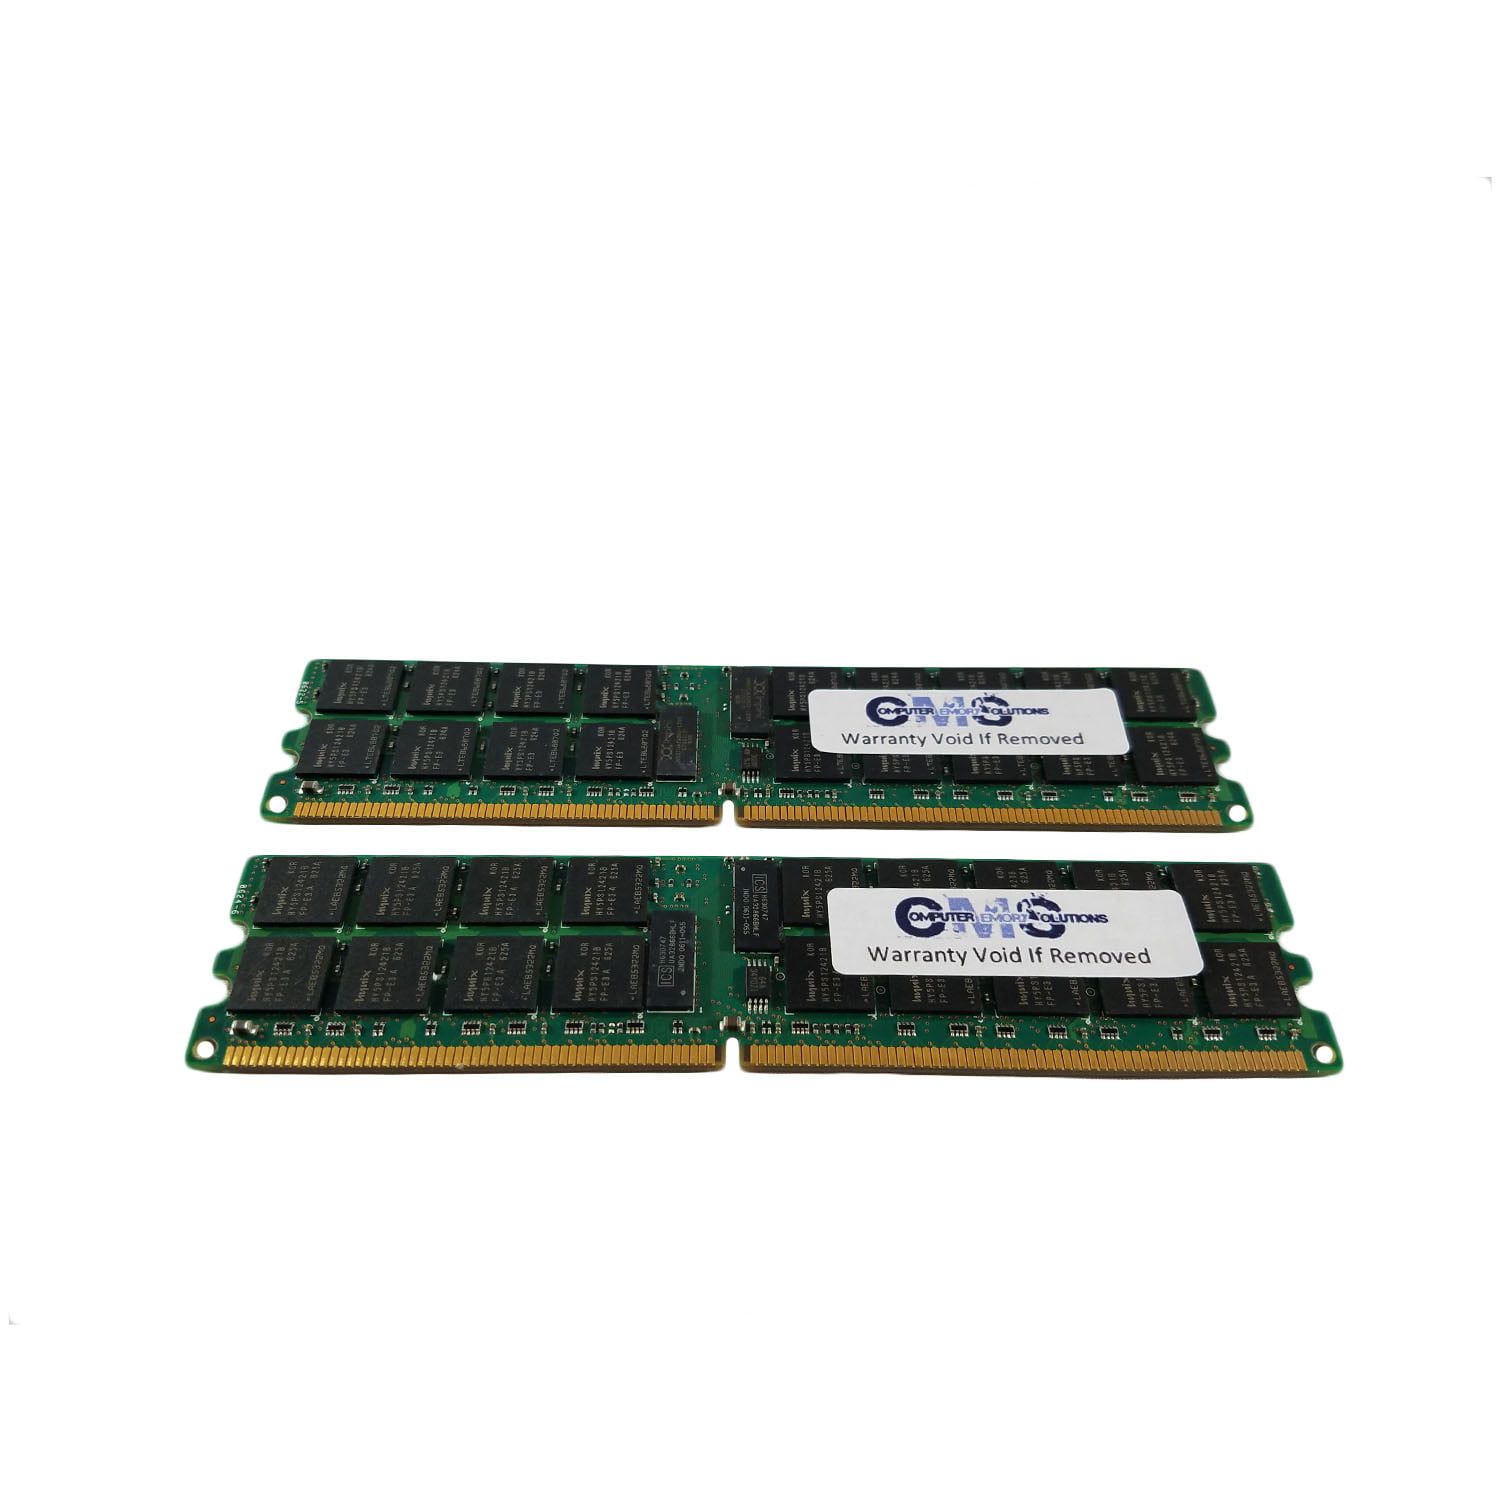 New HP ProLiant ML370 G4 Server Memory 4GB Kit